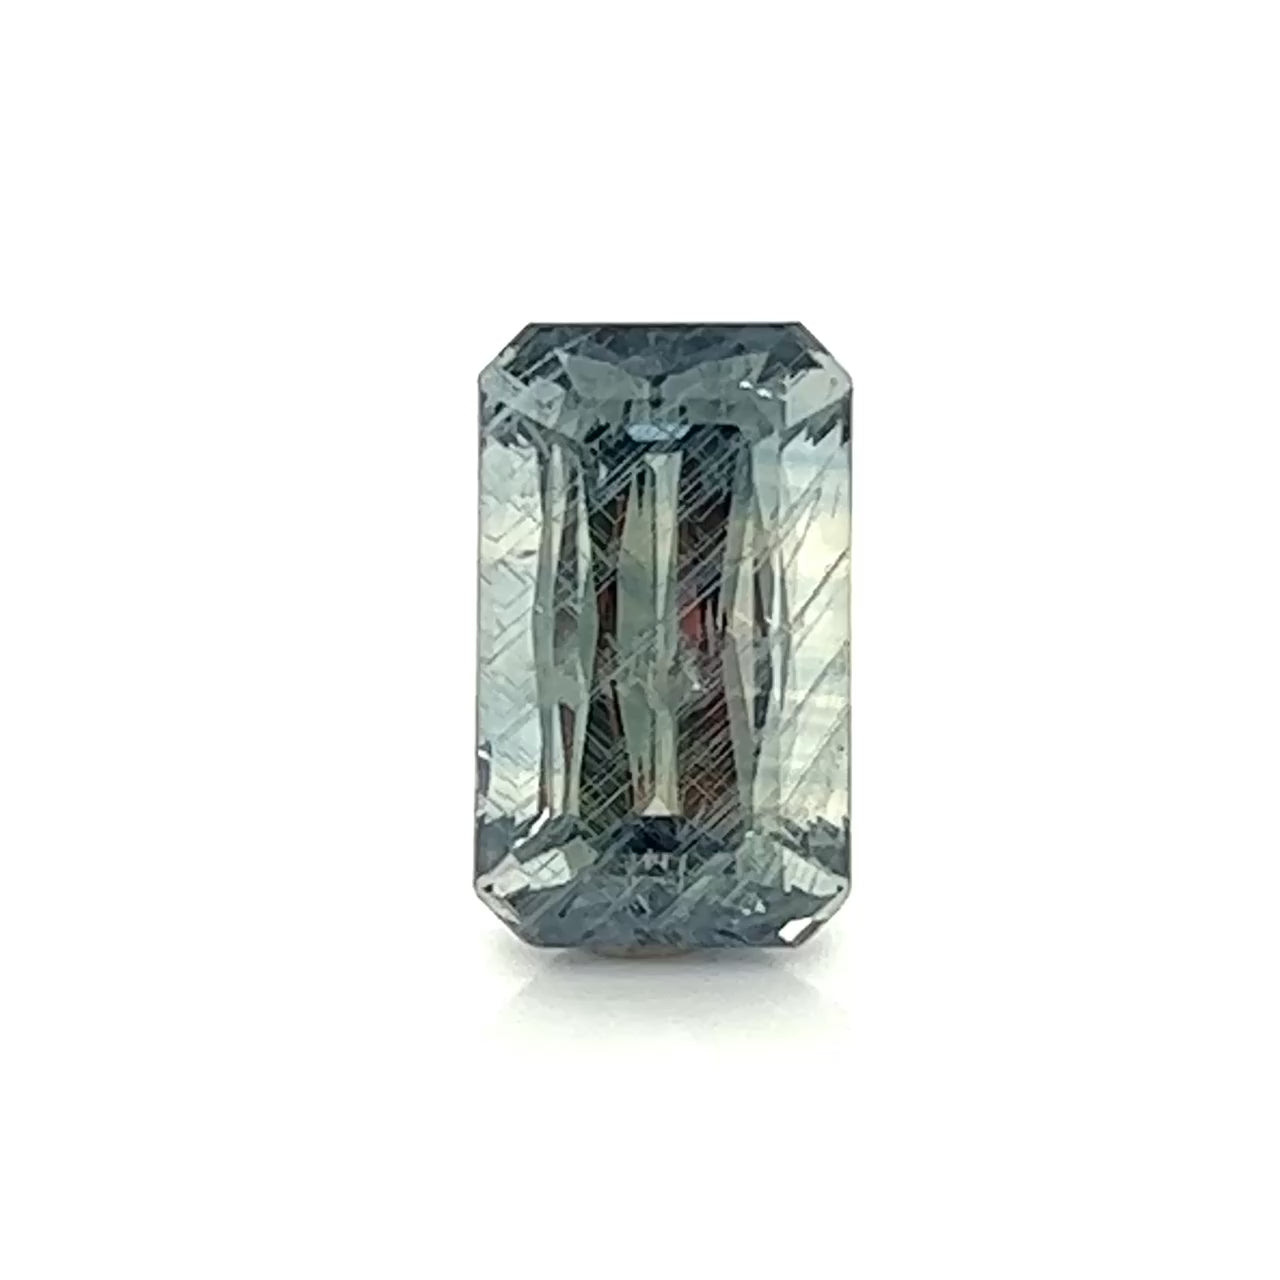 9.50 Carat Light Teal Emerald Cut Sapphire for Custom Work - Inventory Code ECTS950